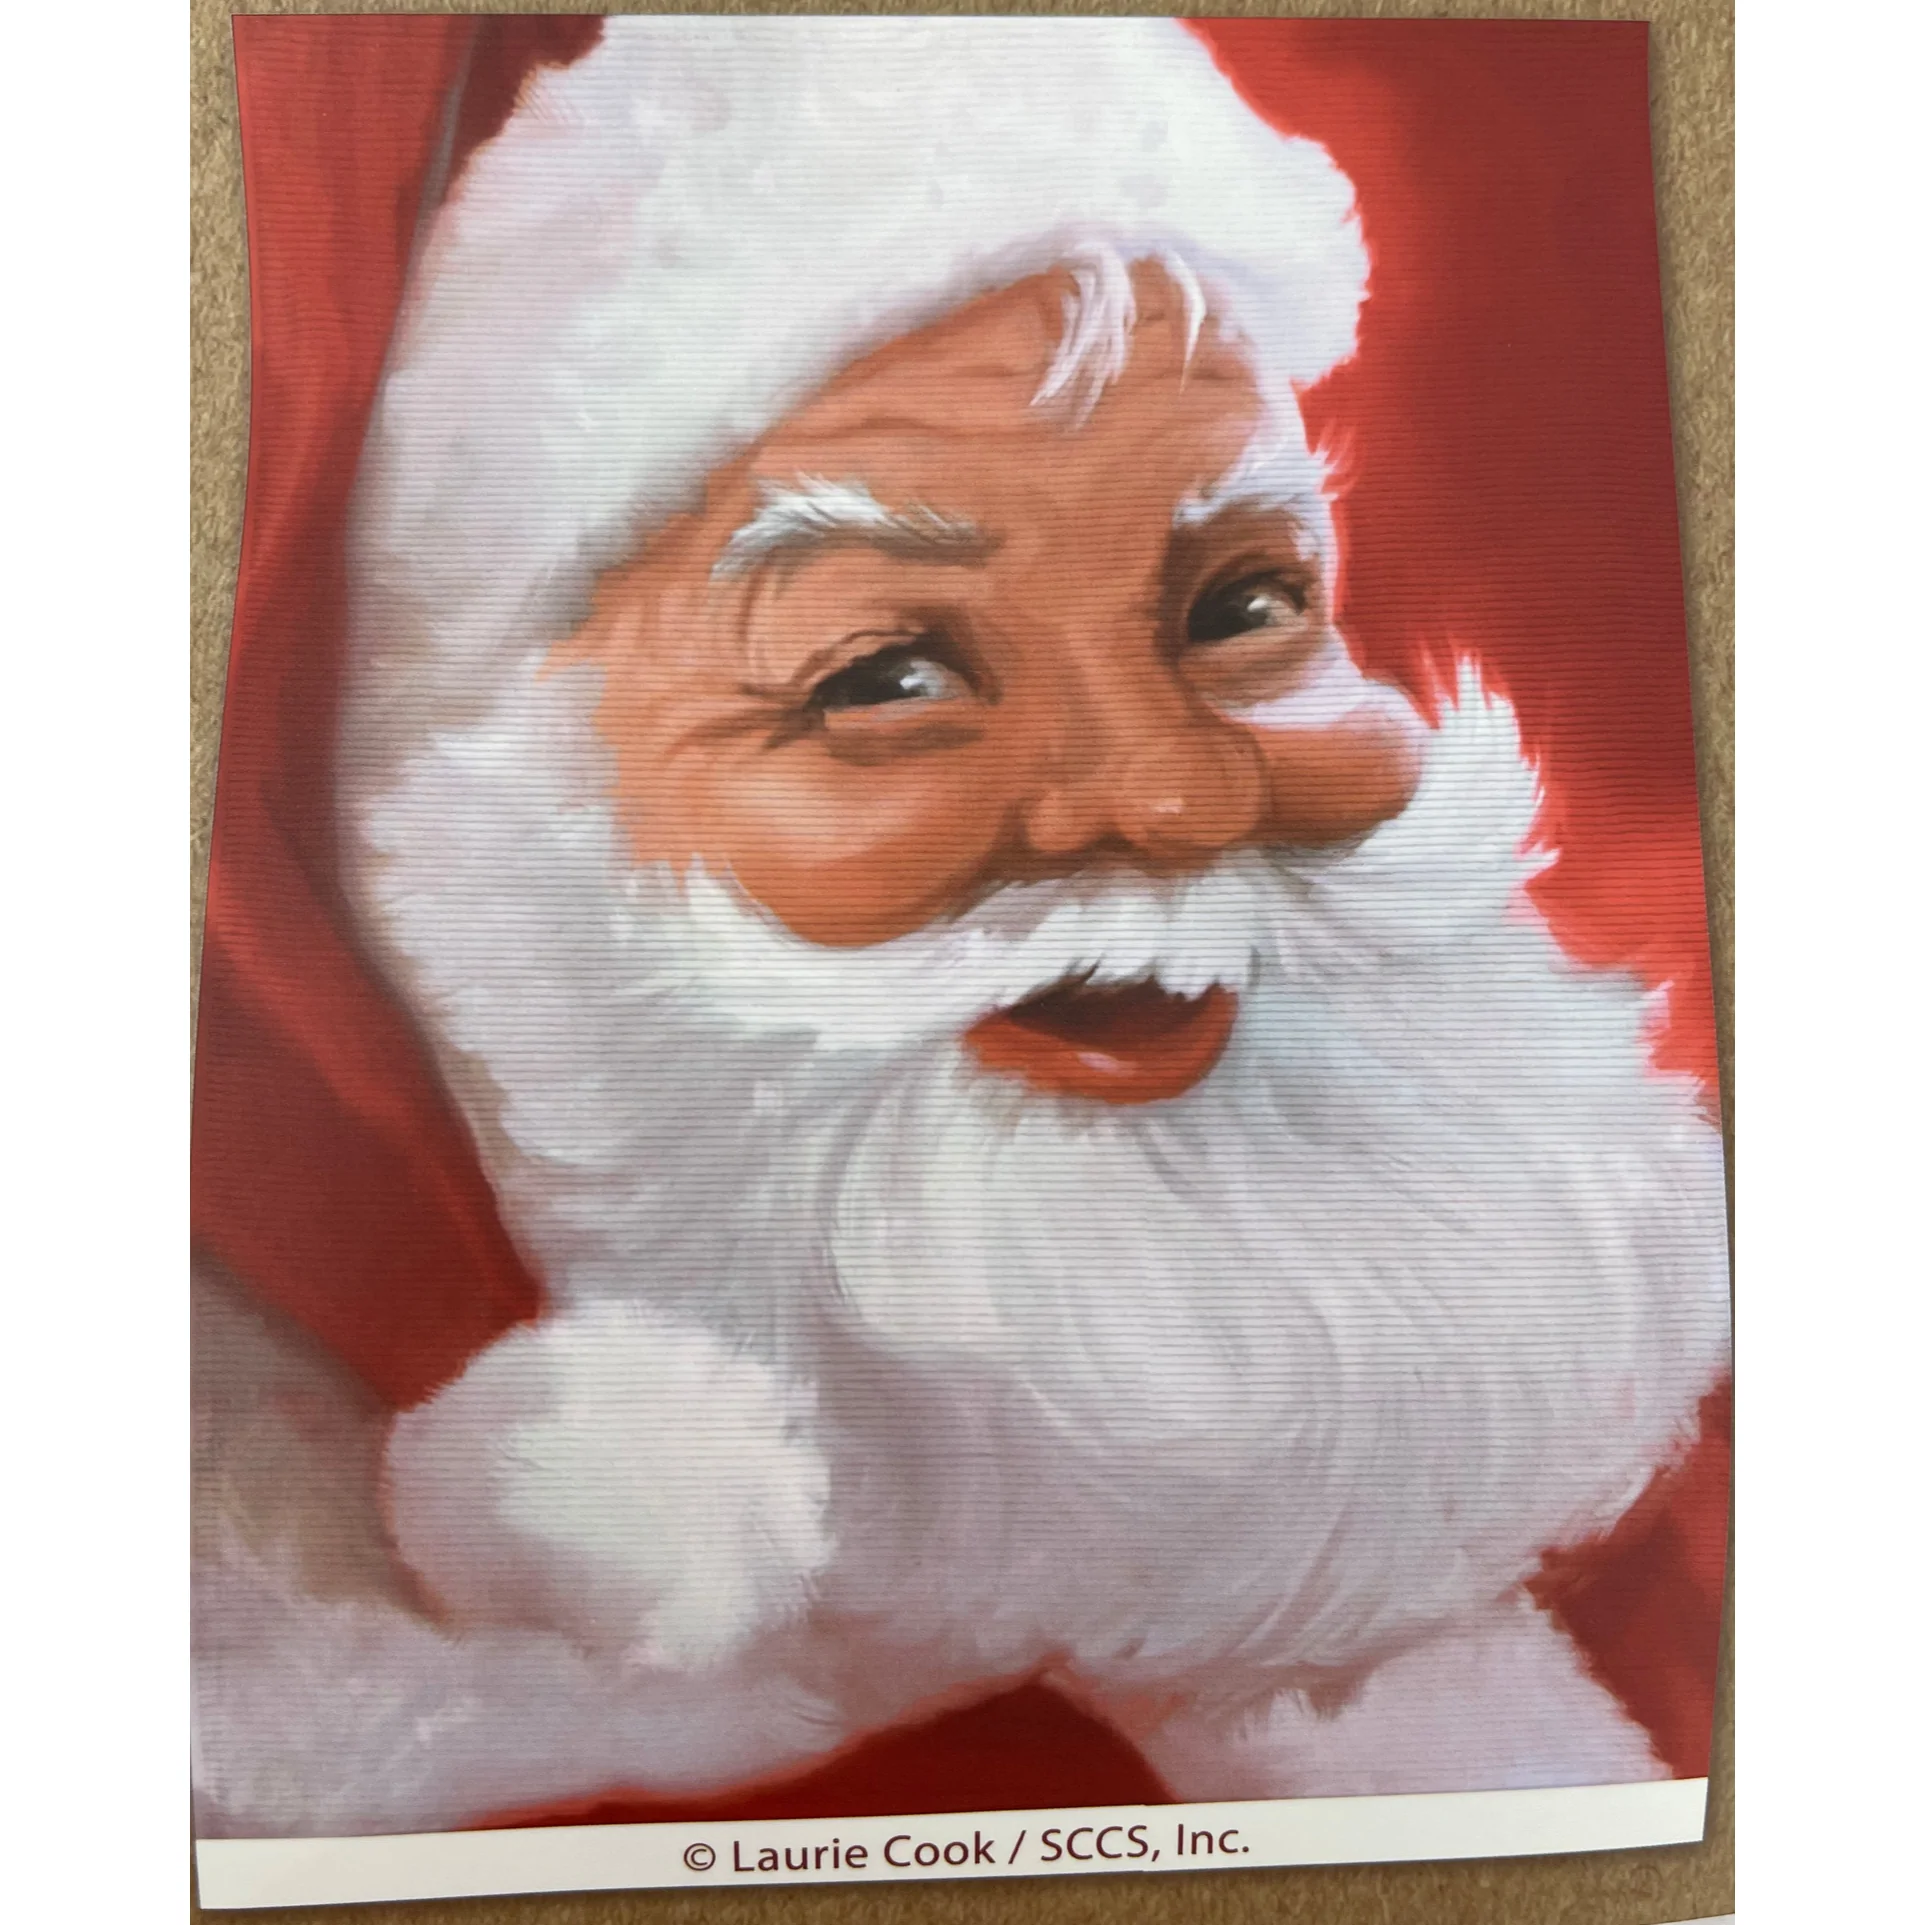 Safdie Santa Claus Throw Blanket / Ribbed Throw / Home Holiday Decor / 48" x 60"